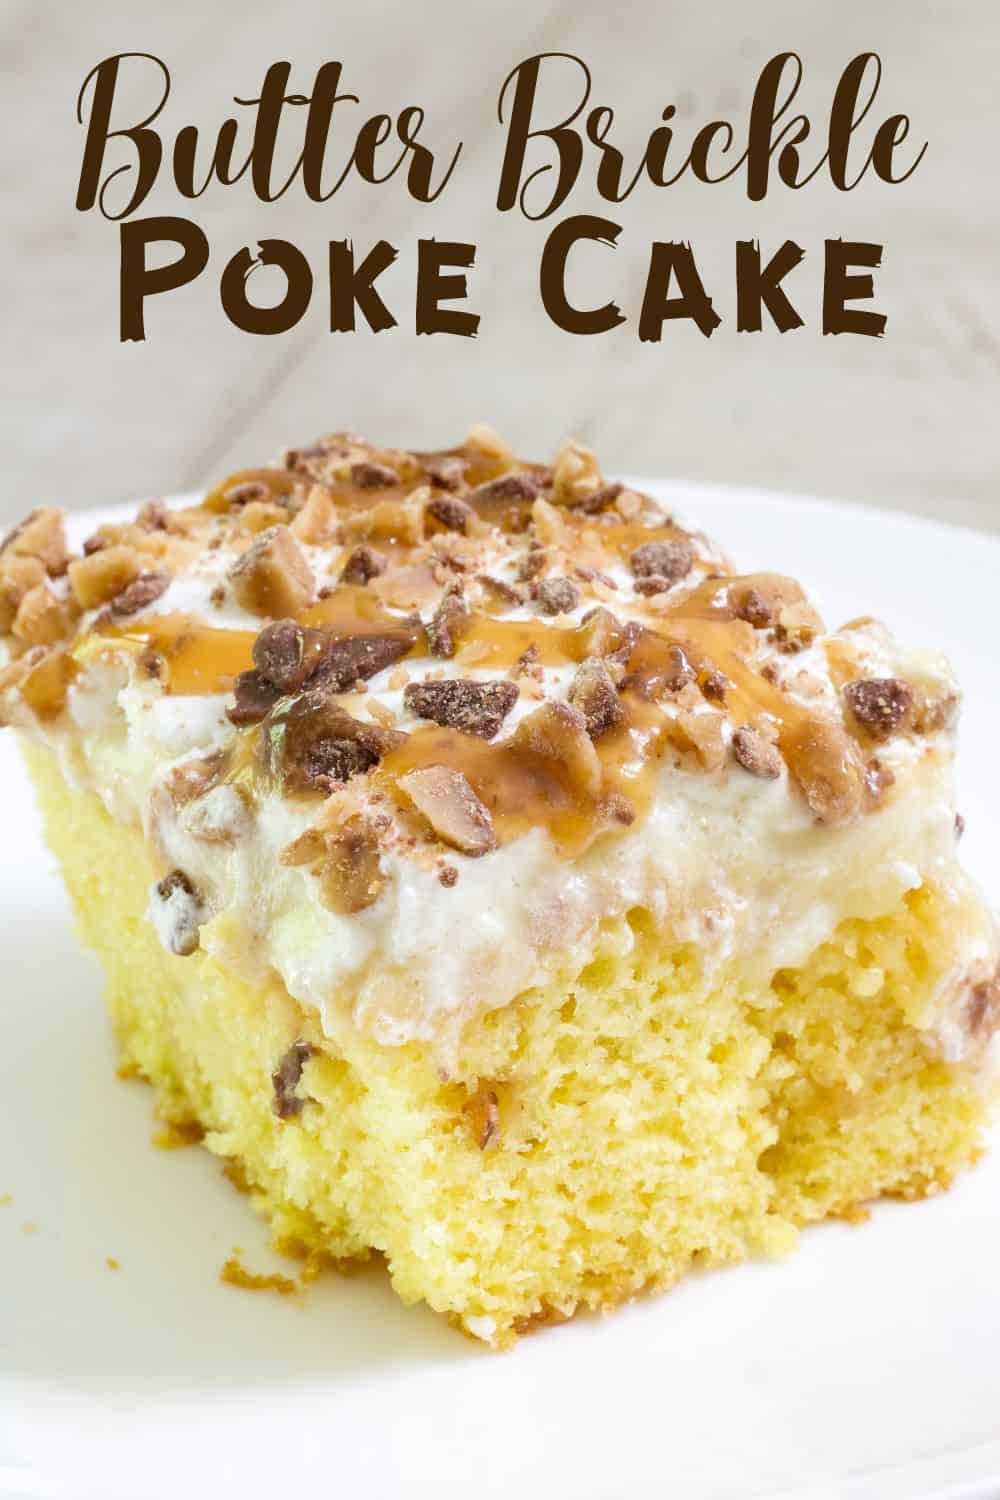 https://www.mindyscookingobsession.com/wp-content/uploads/2022/11/Butter-Brickle-Poke-Cake-1.jpg